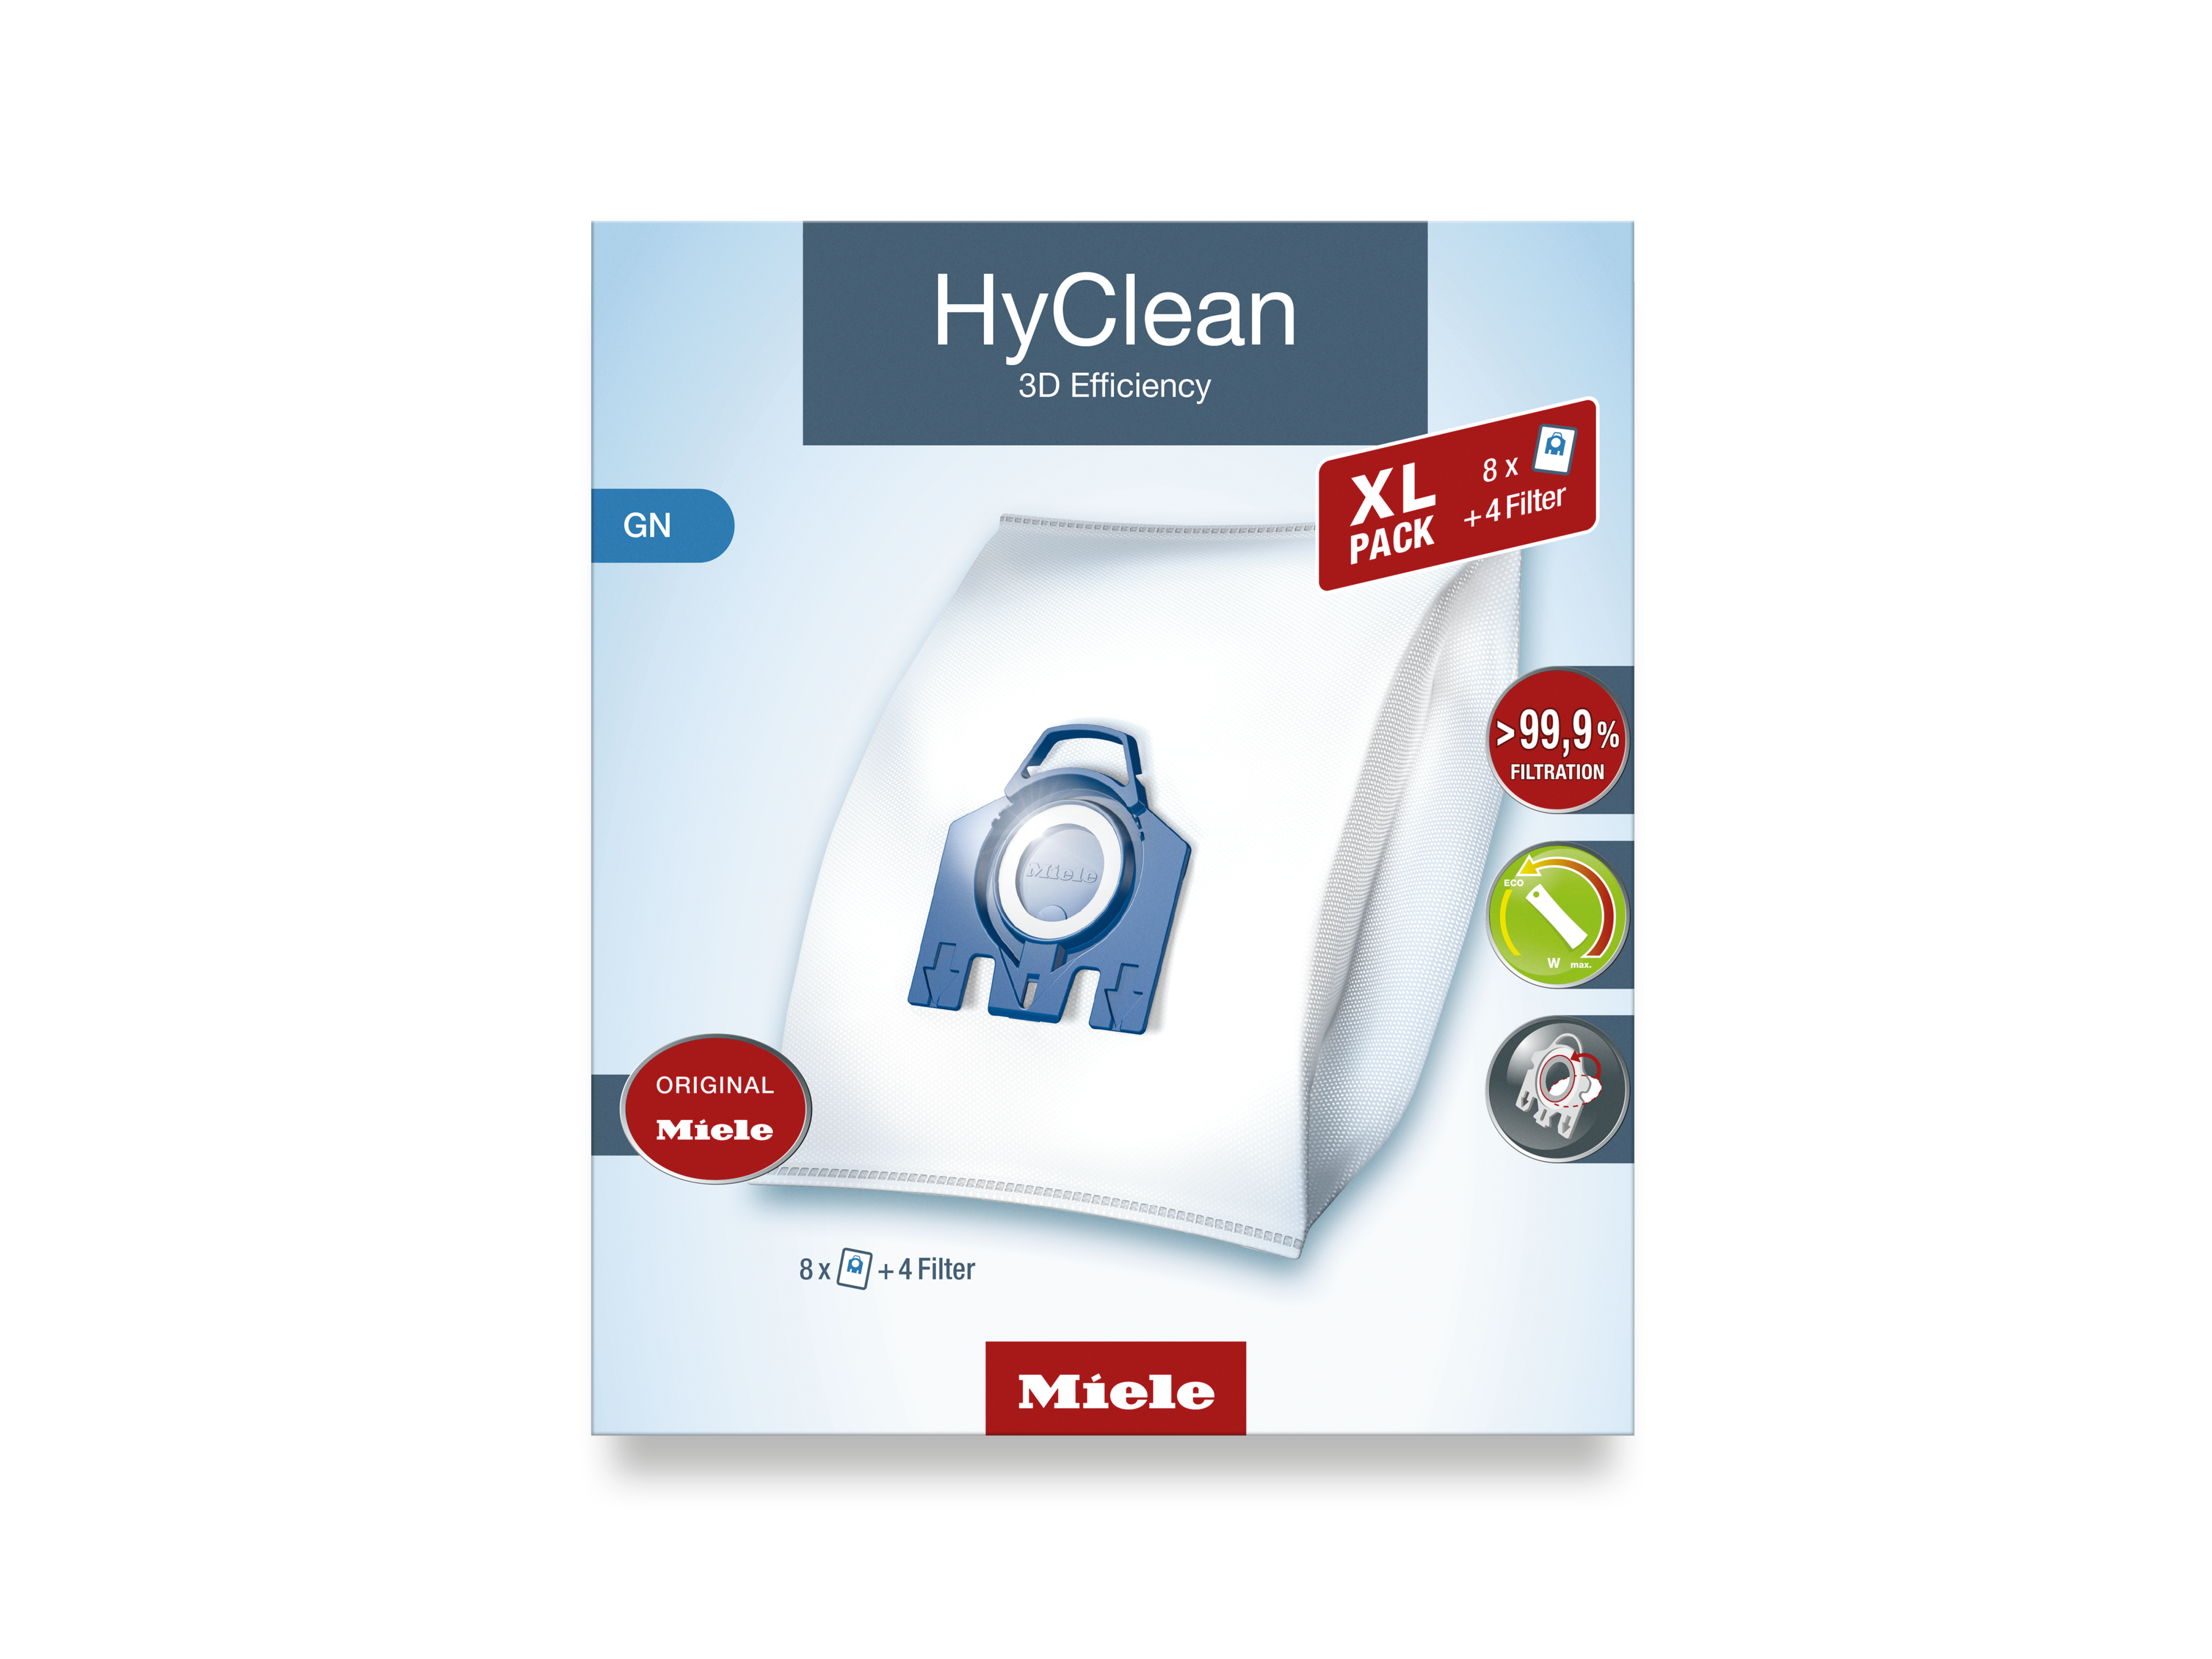 GNXL Hy Clean 3D XL-Pack Hy Clean 3D Efficiency GN